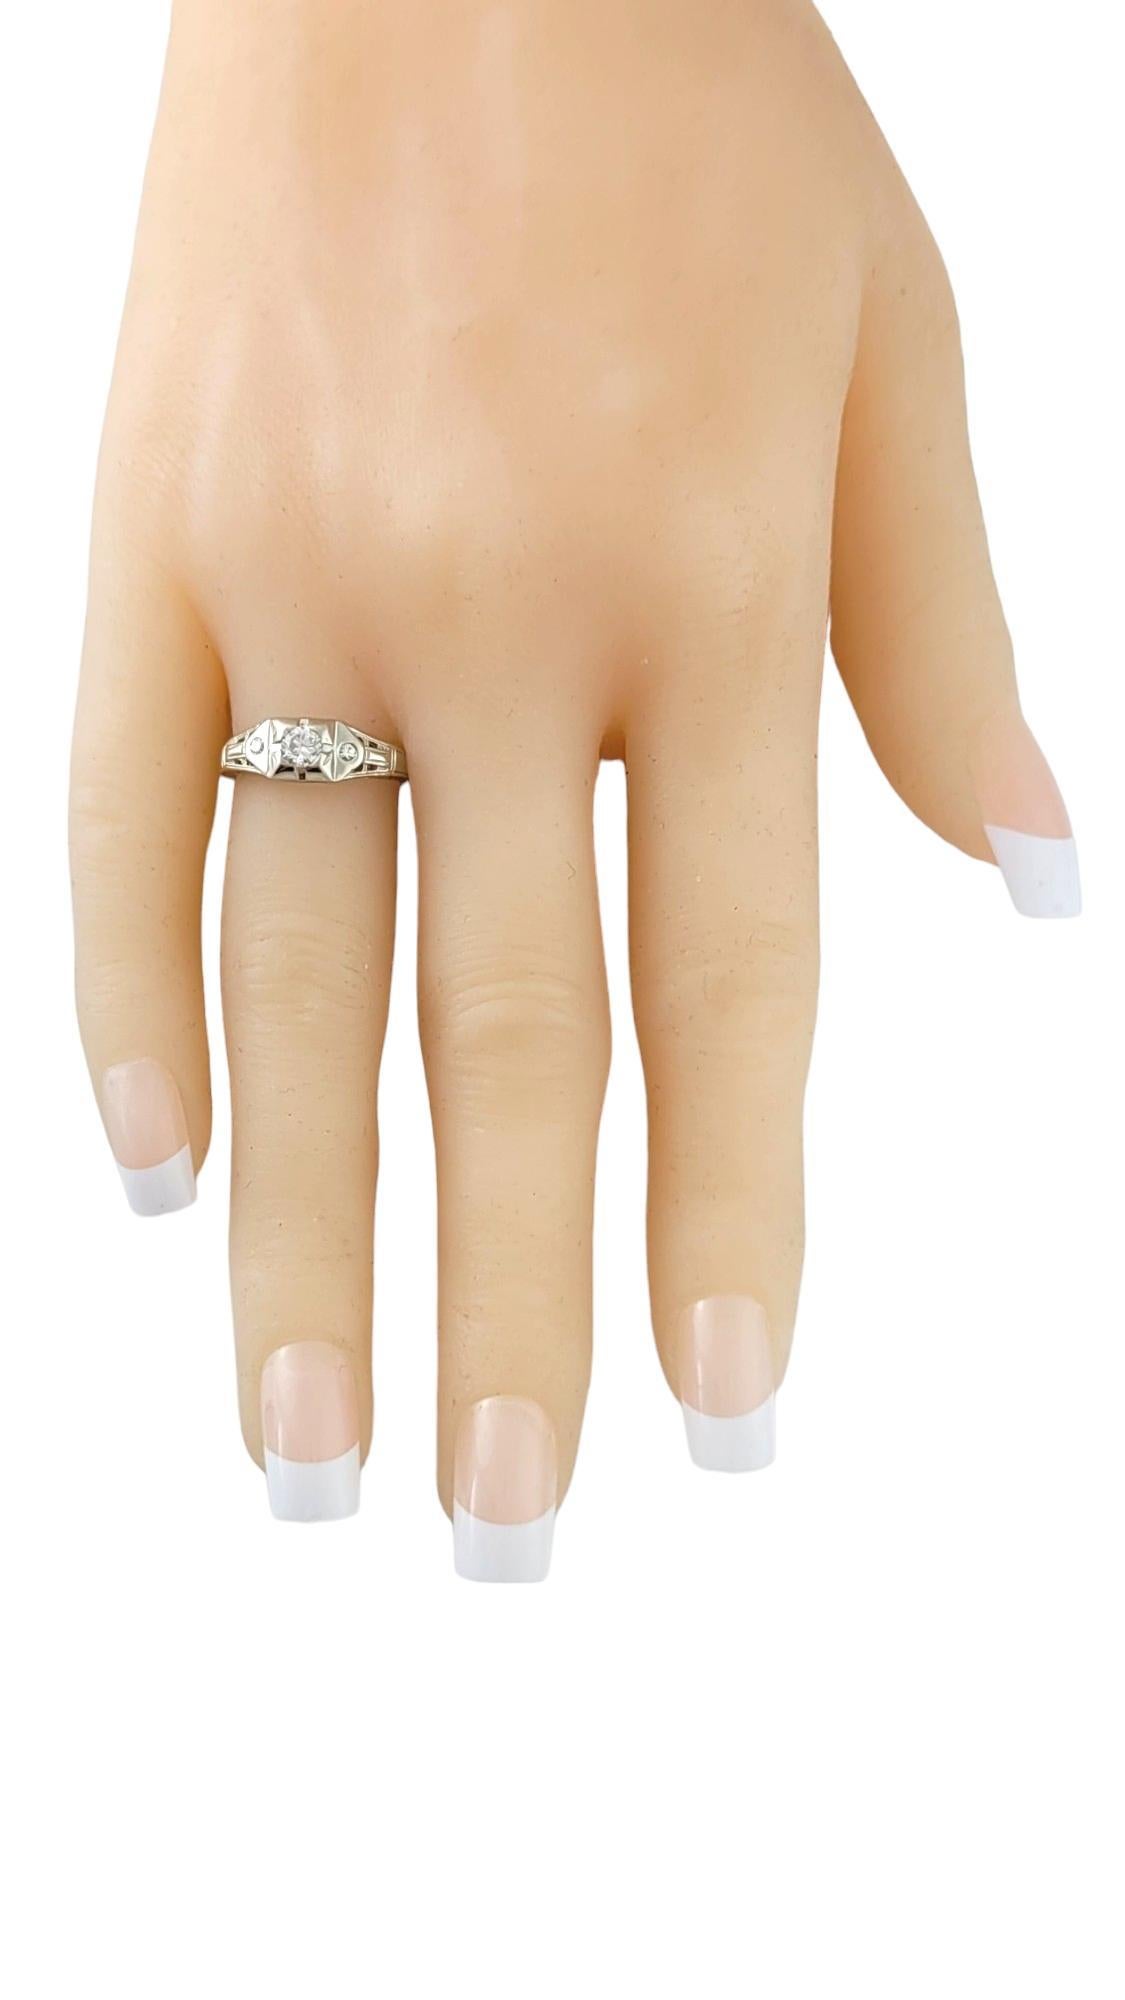 Vintage 14K White Gold Diamond Ring Size 4.75 #16930 For Sale 1